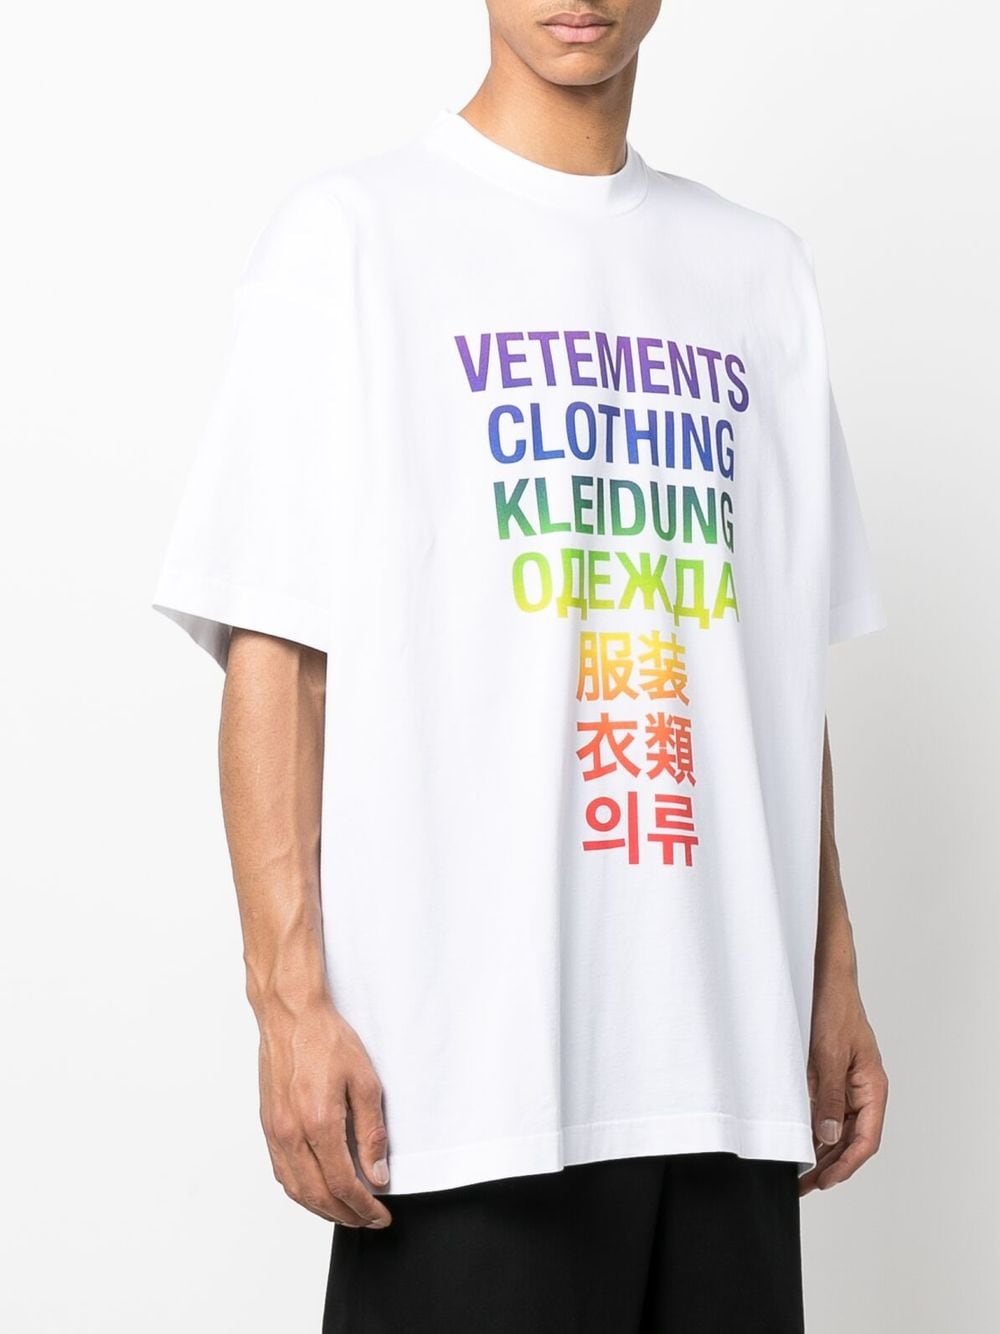 vetements ロシアtシャツ サイズM オーバーサイズ - www.sorbillomenu.com